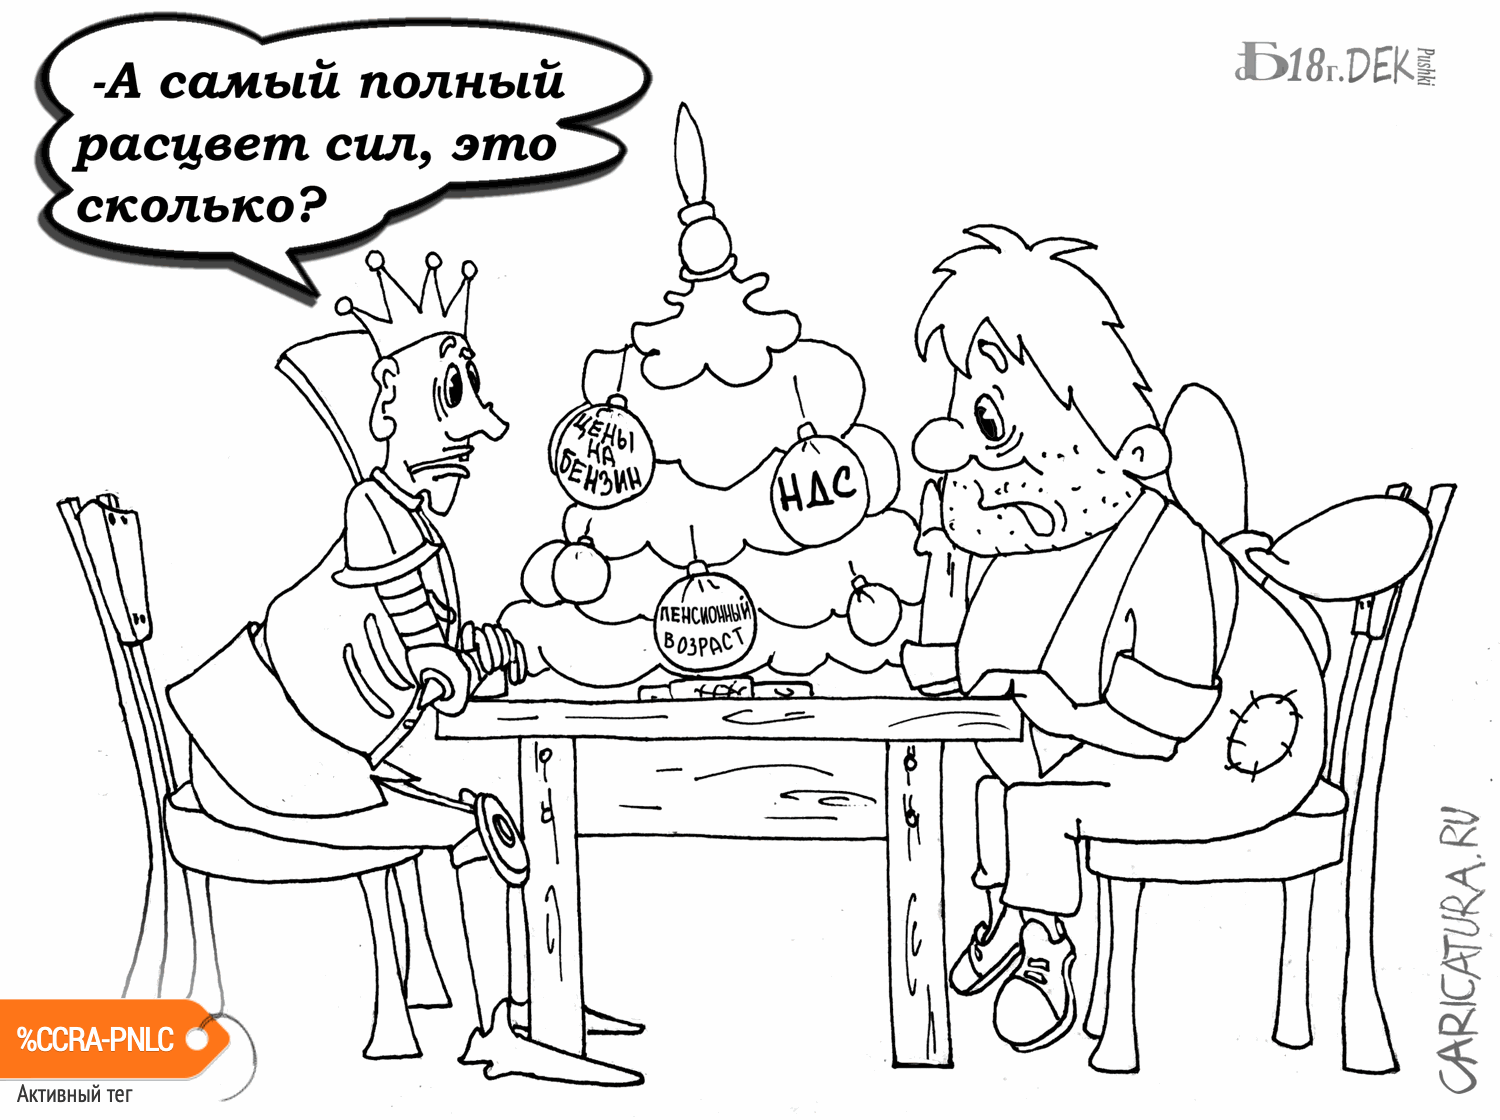 Карикатура "Про самый полный..", Борис Демин